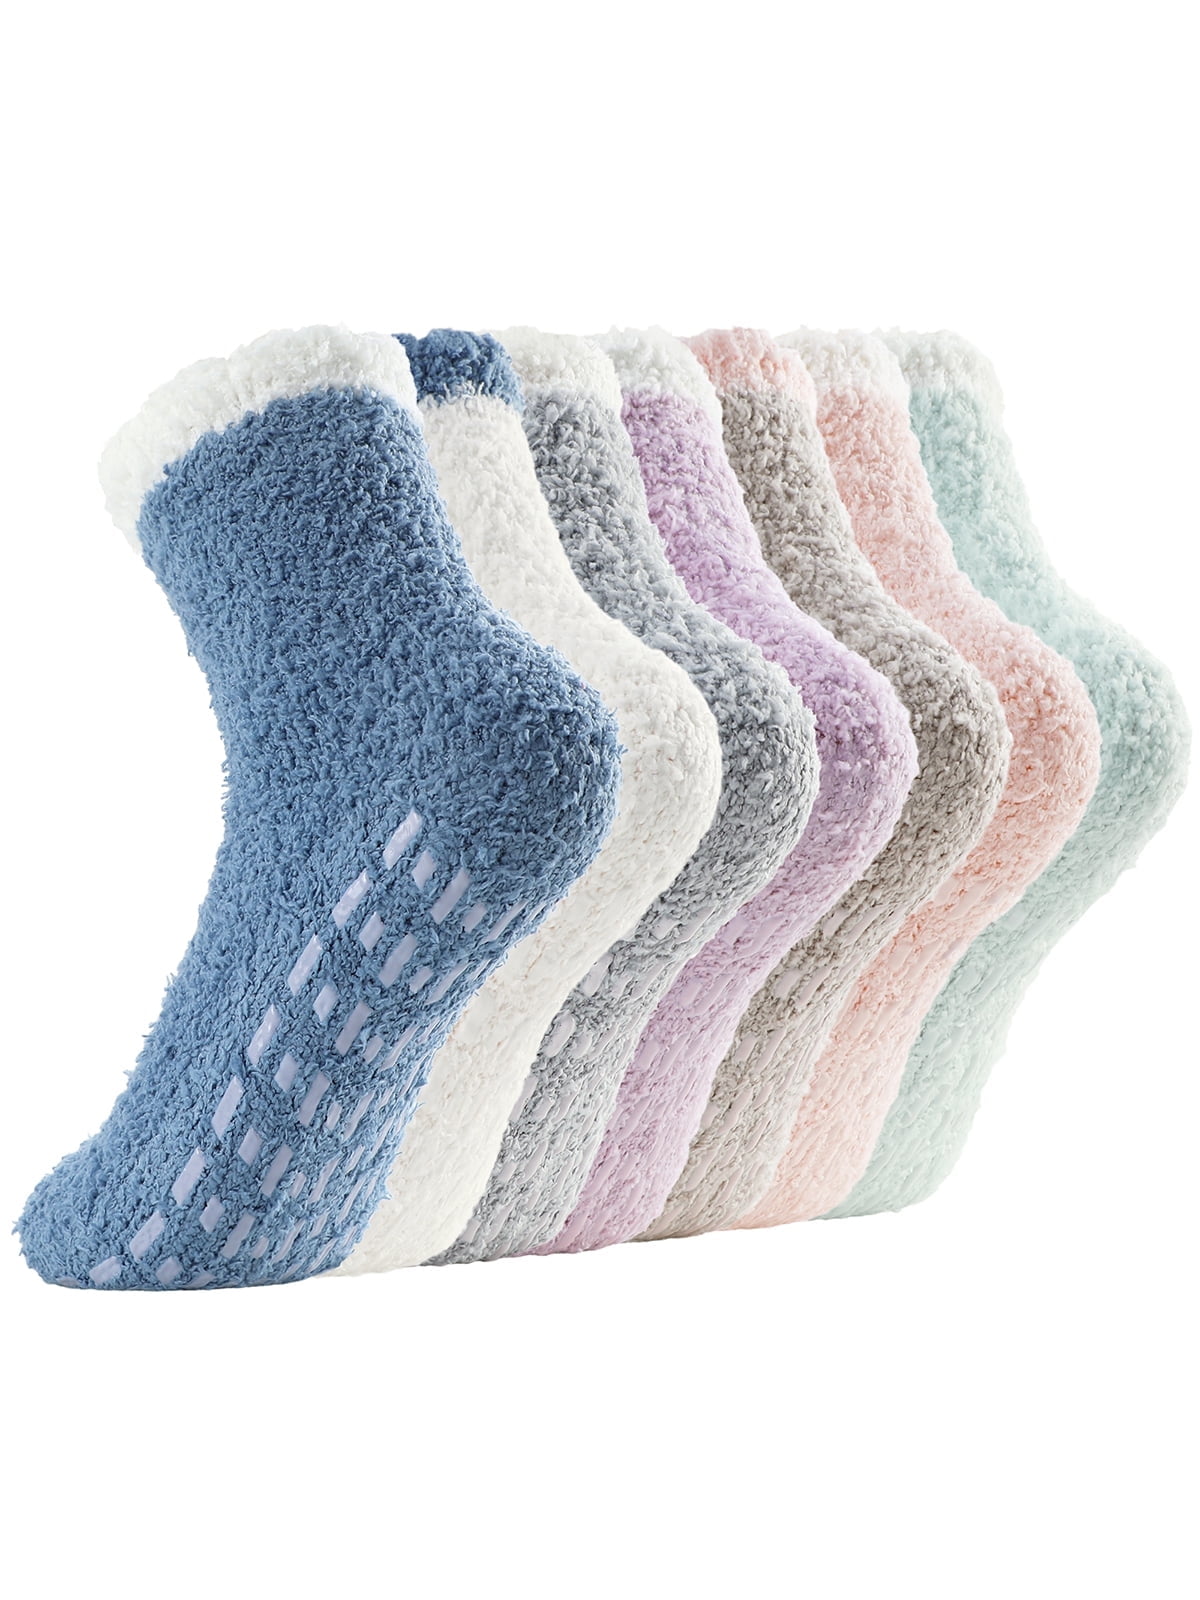 SKOLA 4 Pairs Cozy Winter Fuzzy Women Socks Grip Slippers Fluffy